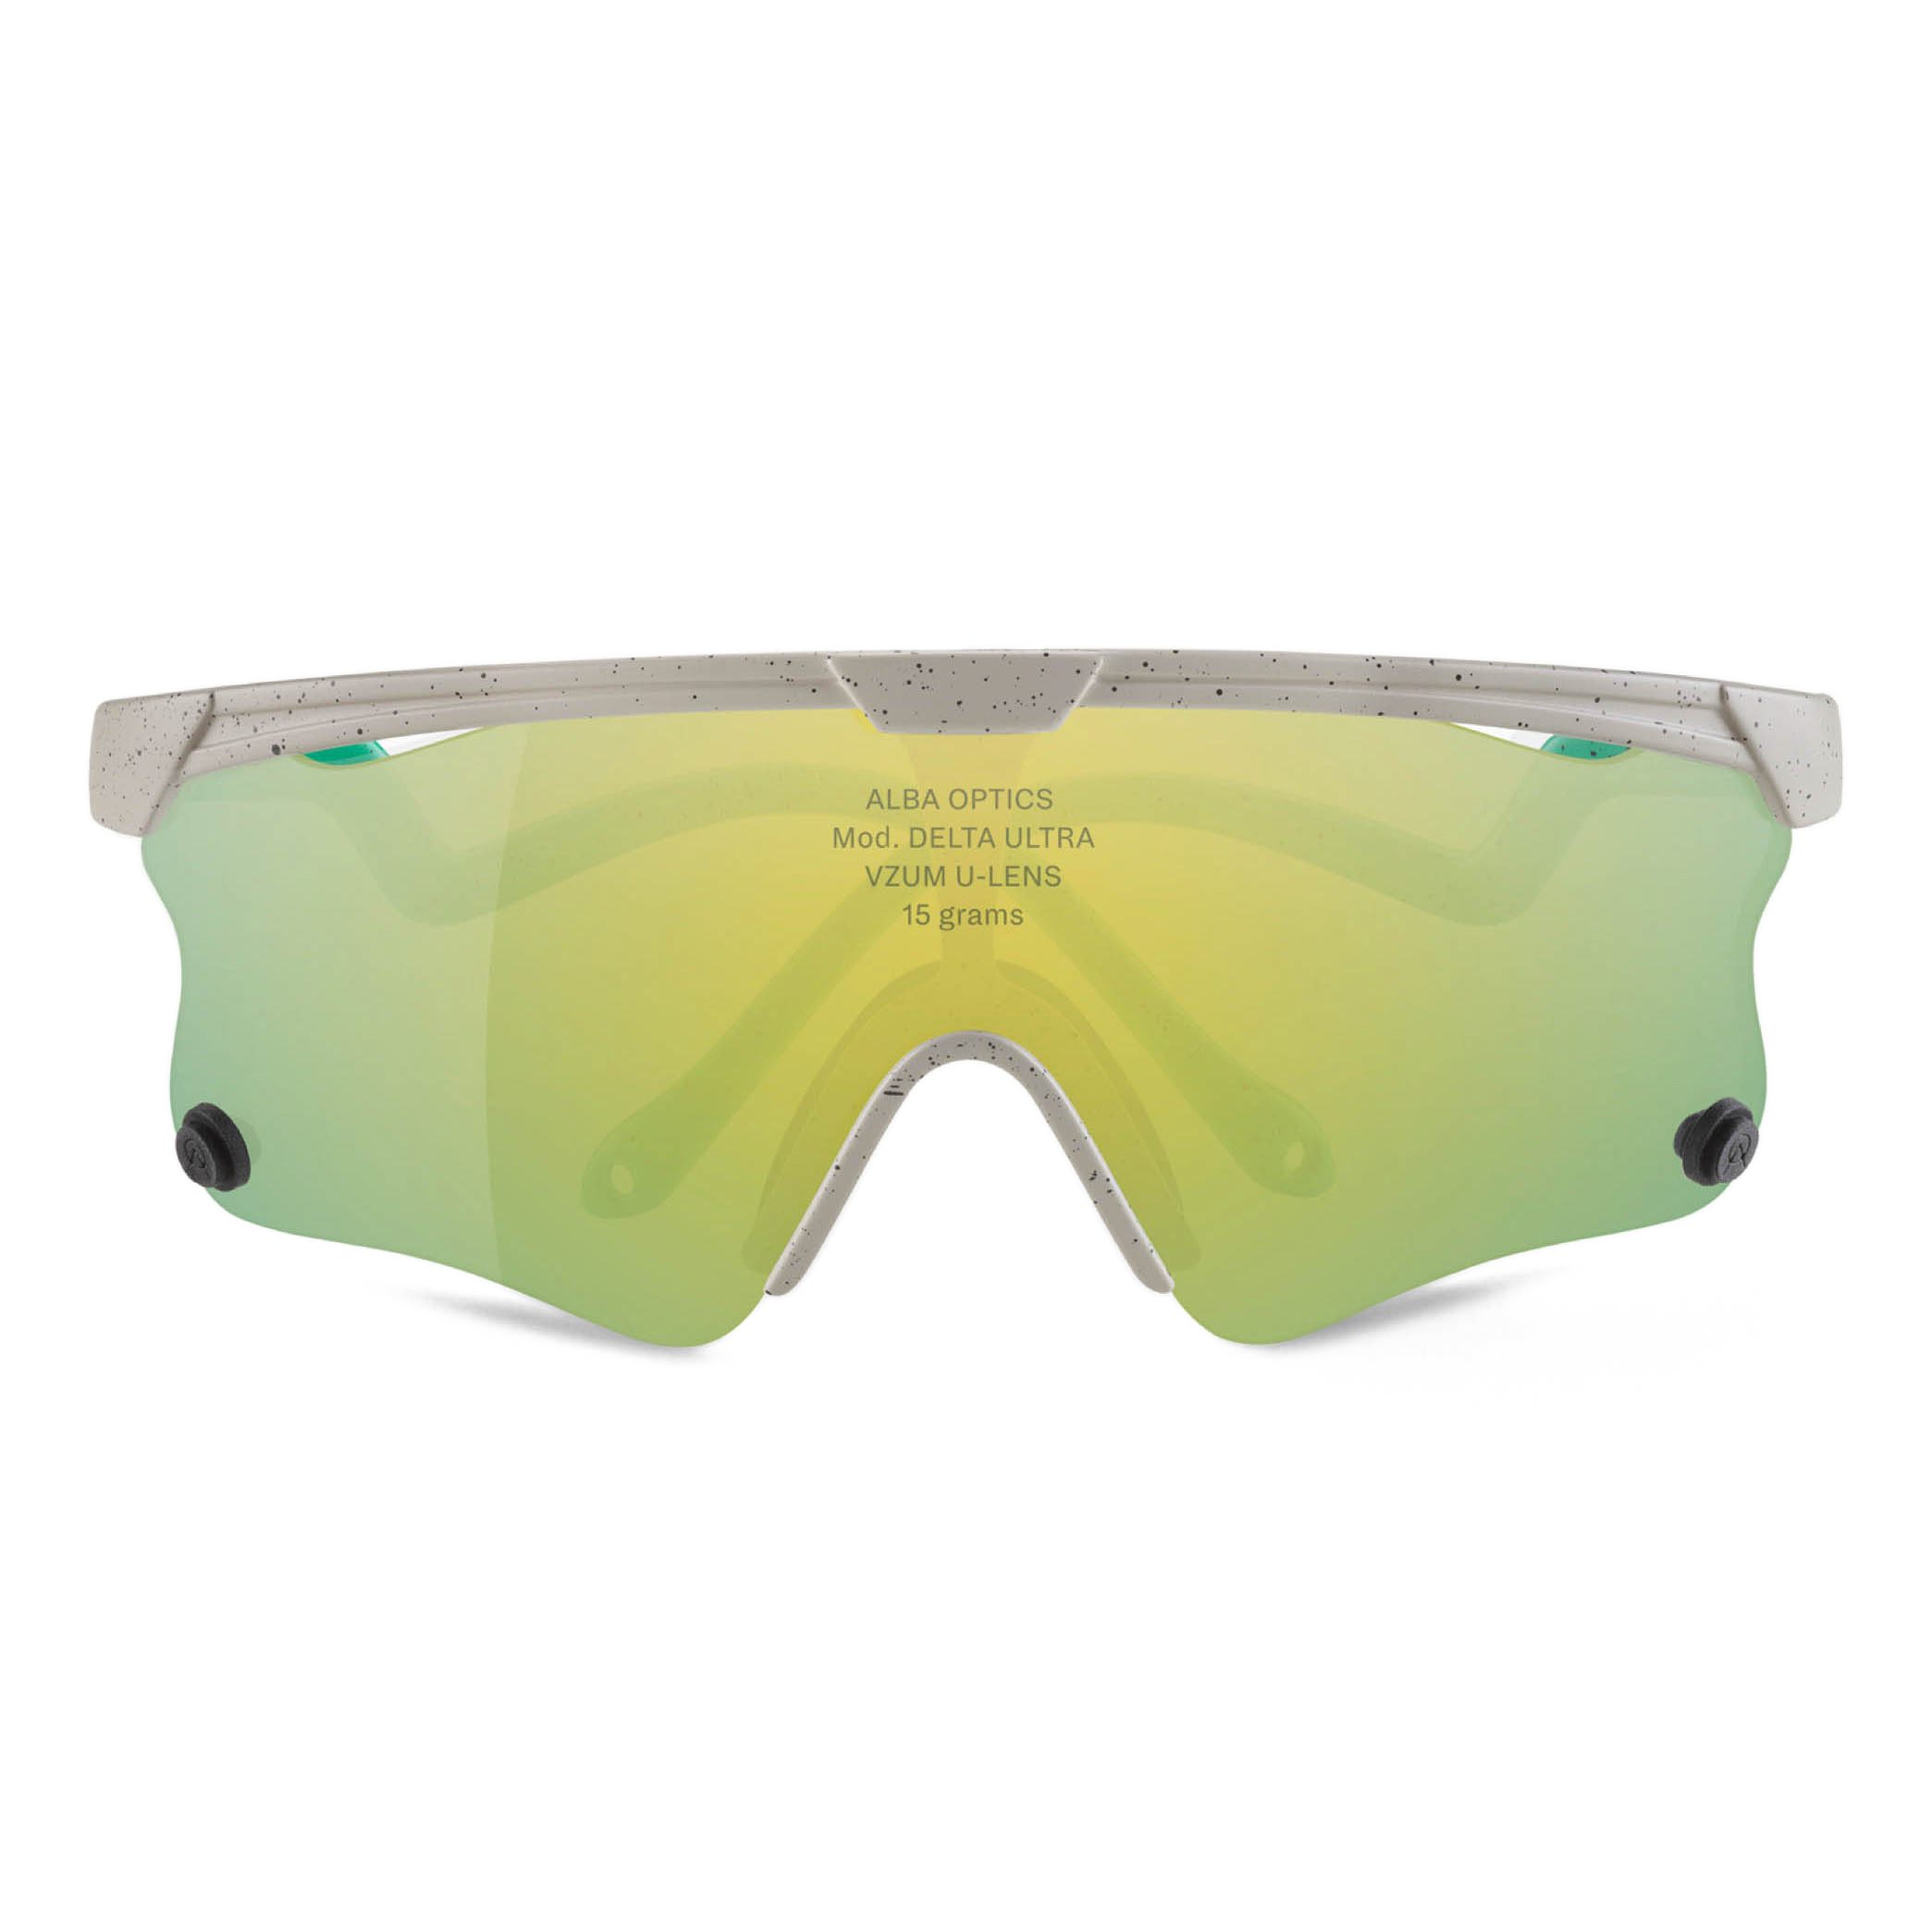 Alba Optics Delta Ultra Grn Vzum King Sunglasses - Green